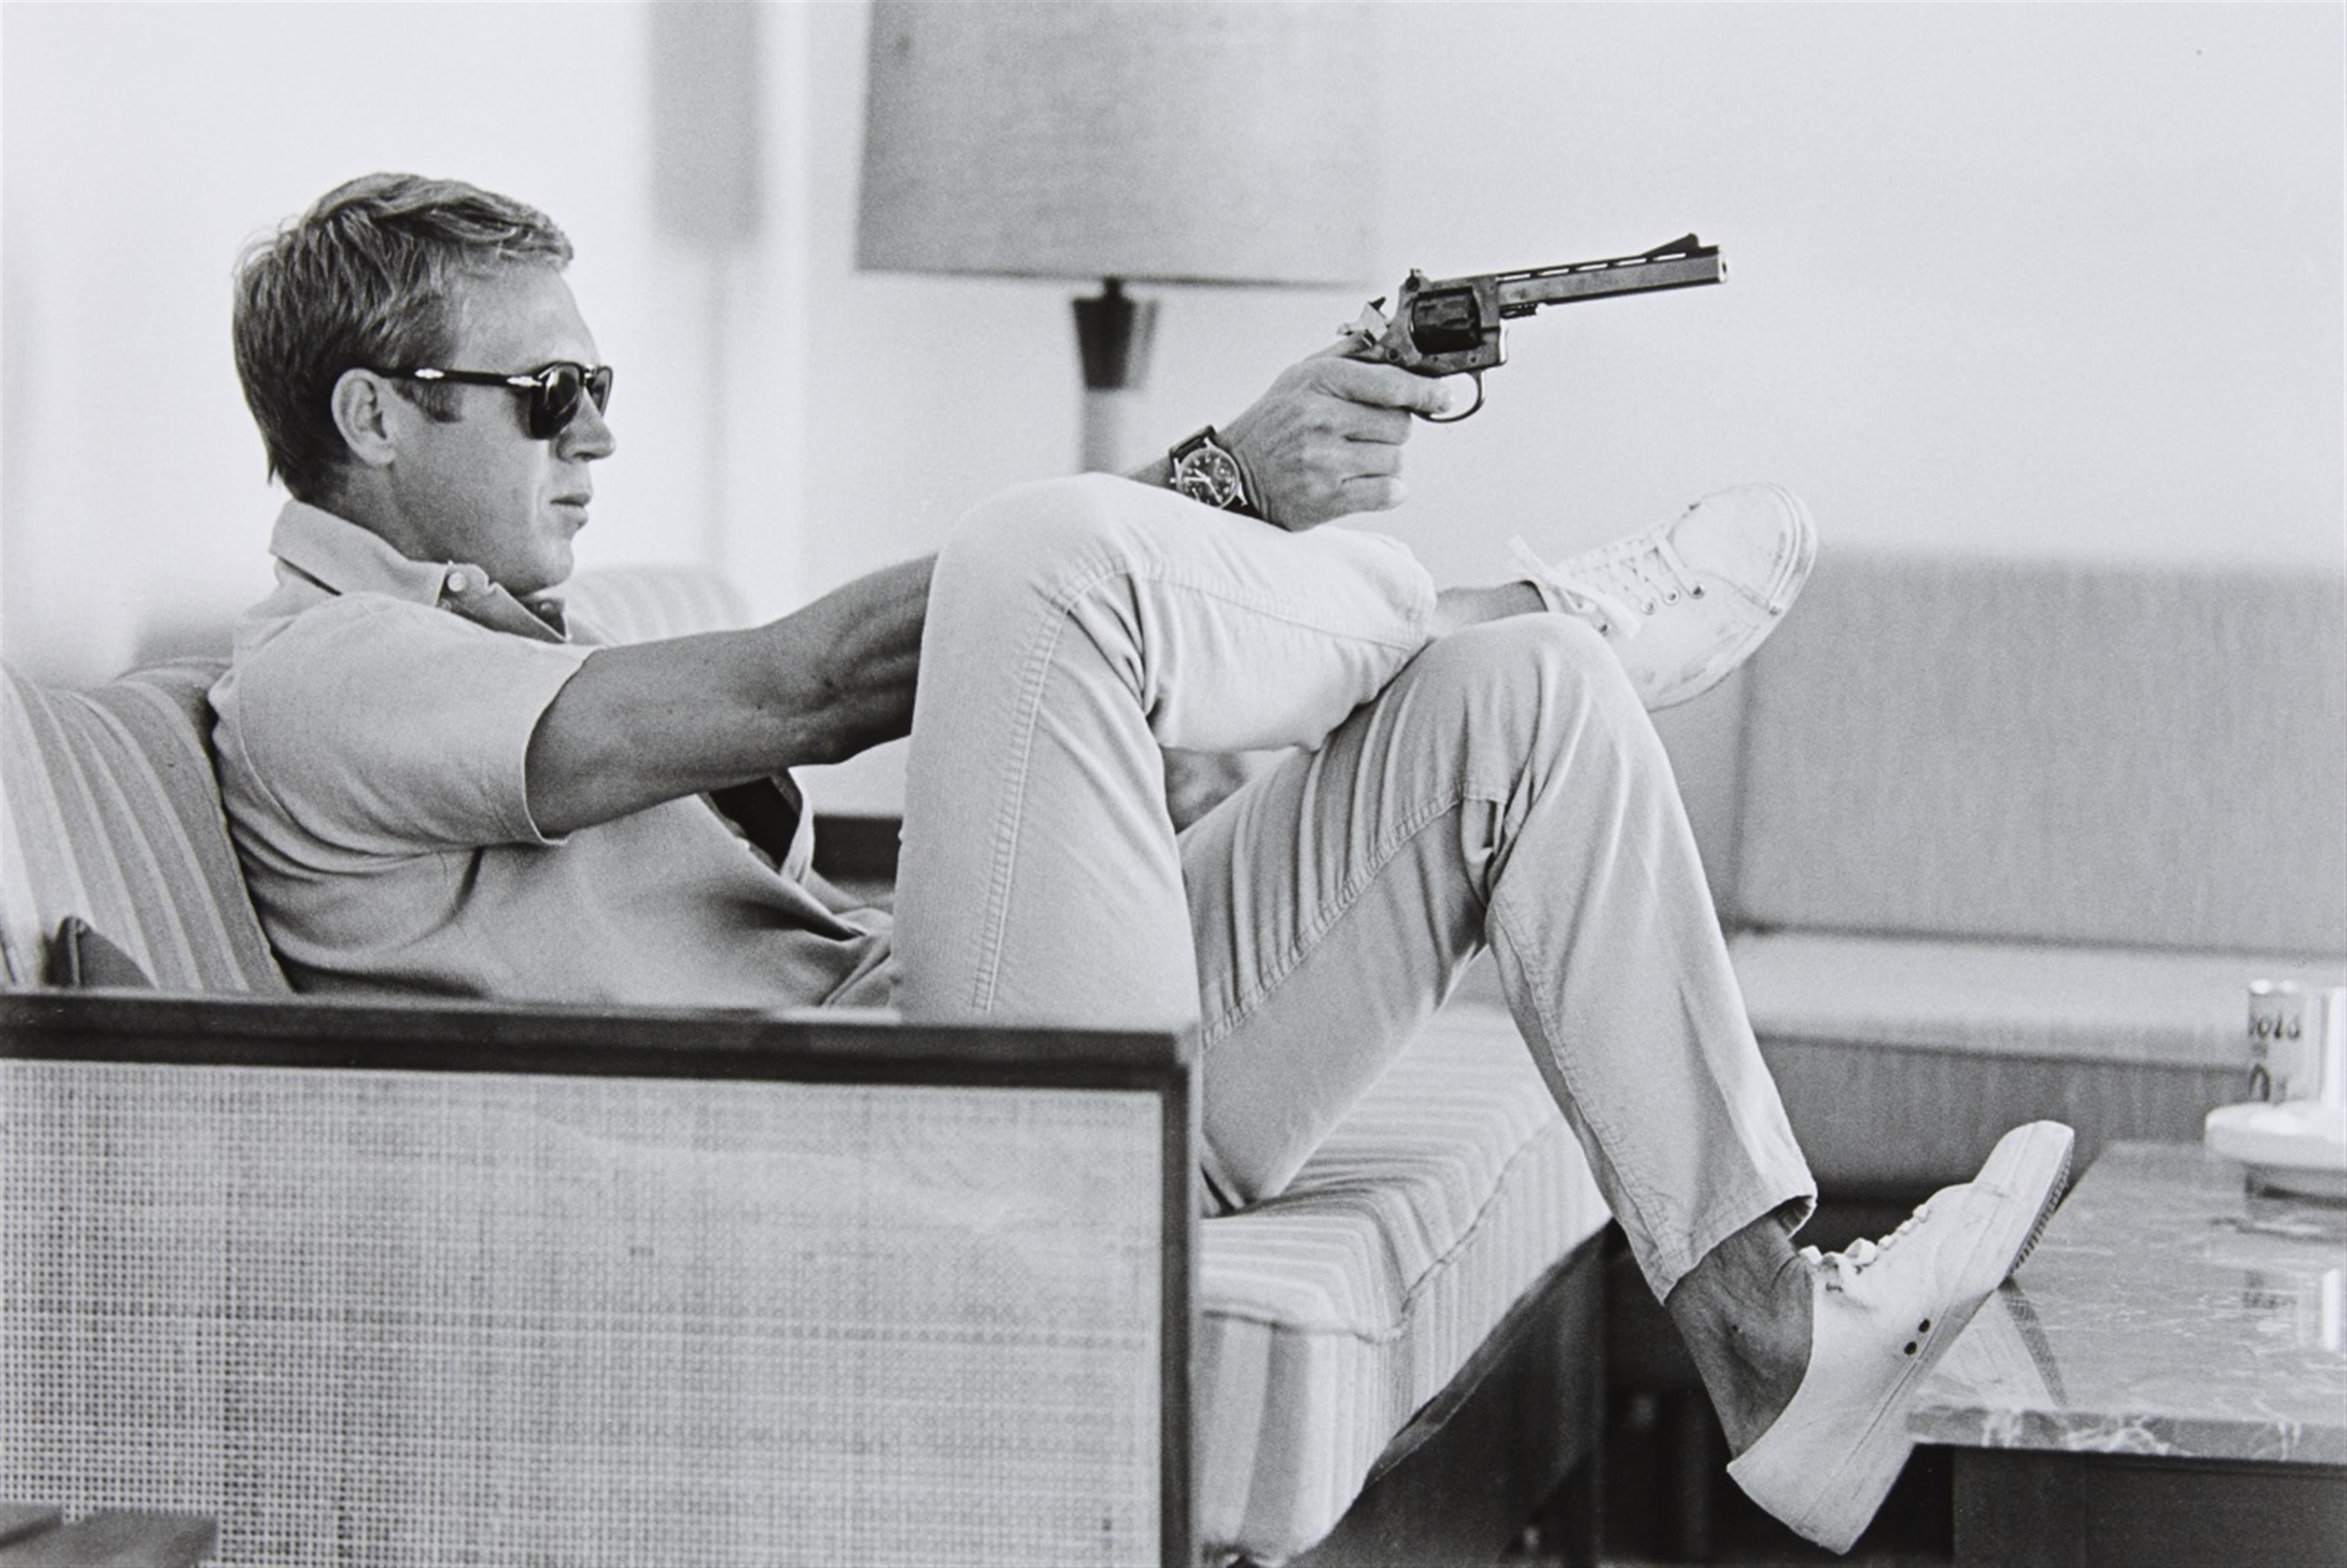 John Dominis - Steve McQueen aims a pistol in his living room, CA - image-1